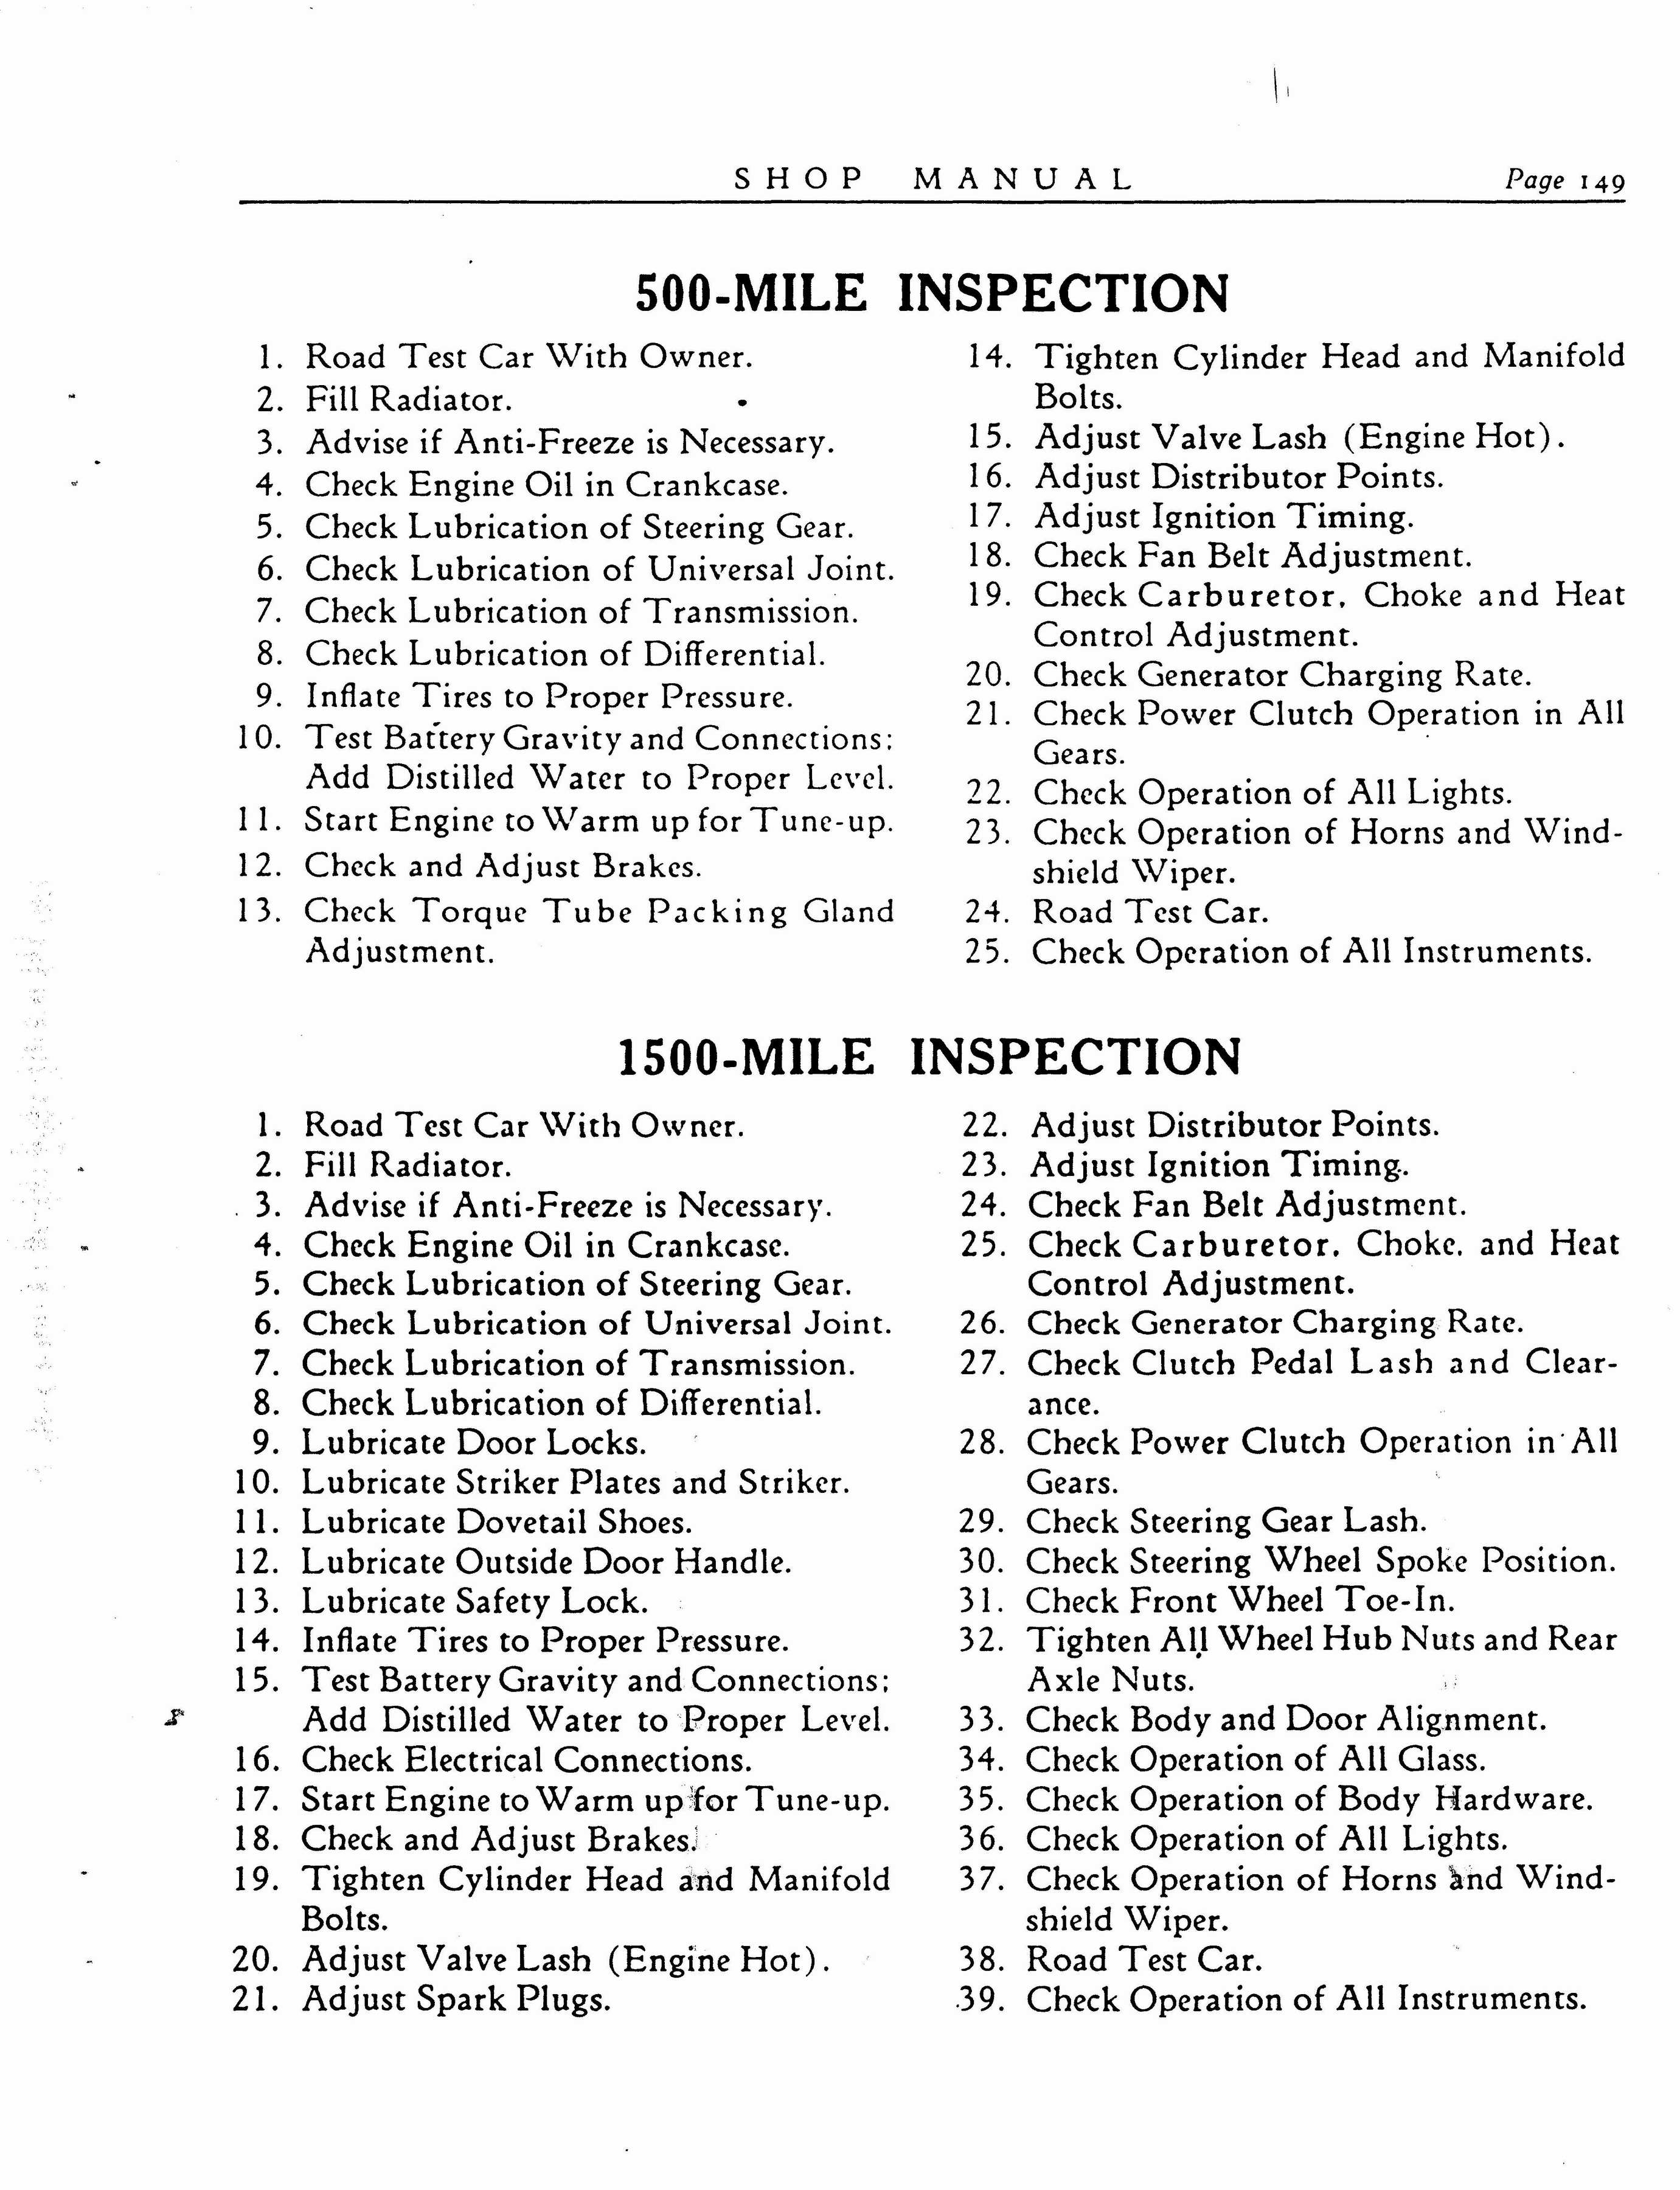 n_1933 Buick Shop Manual_Page_150.jpg